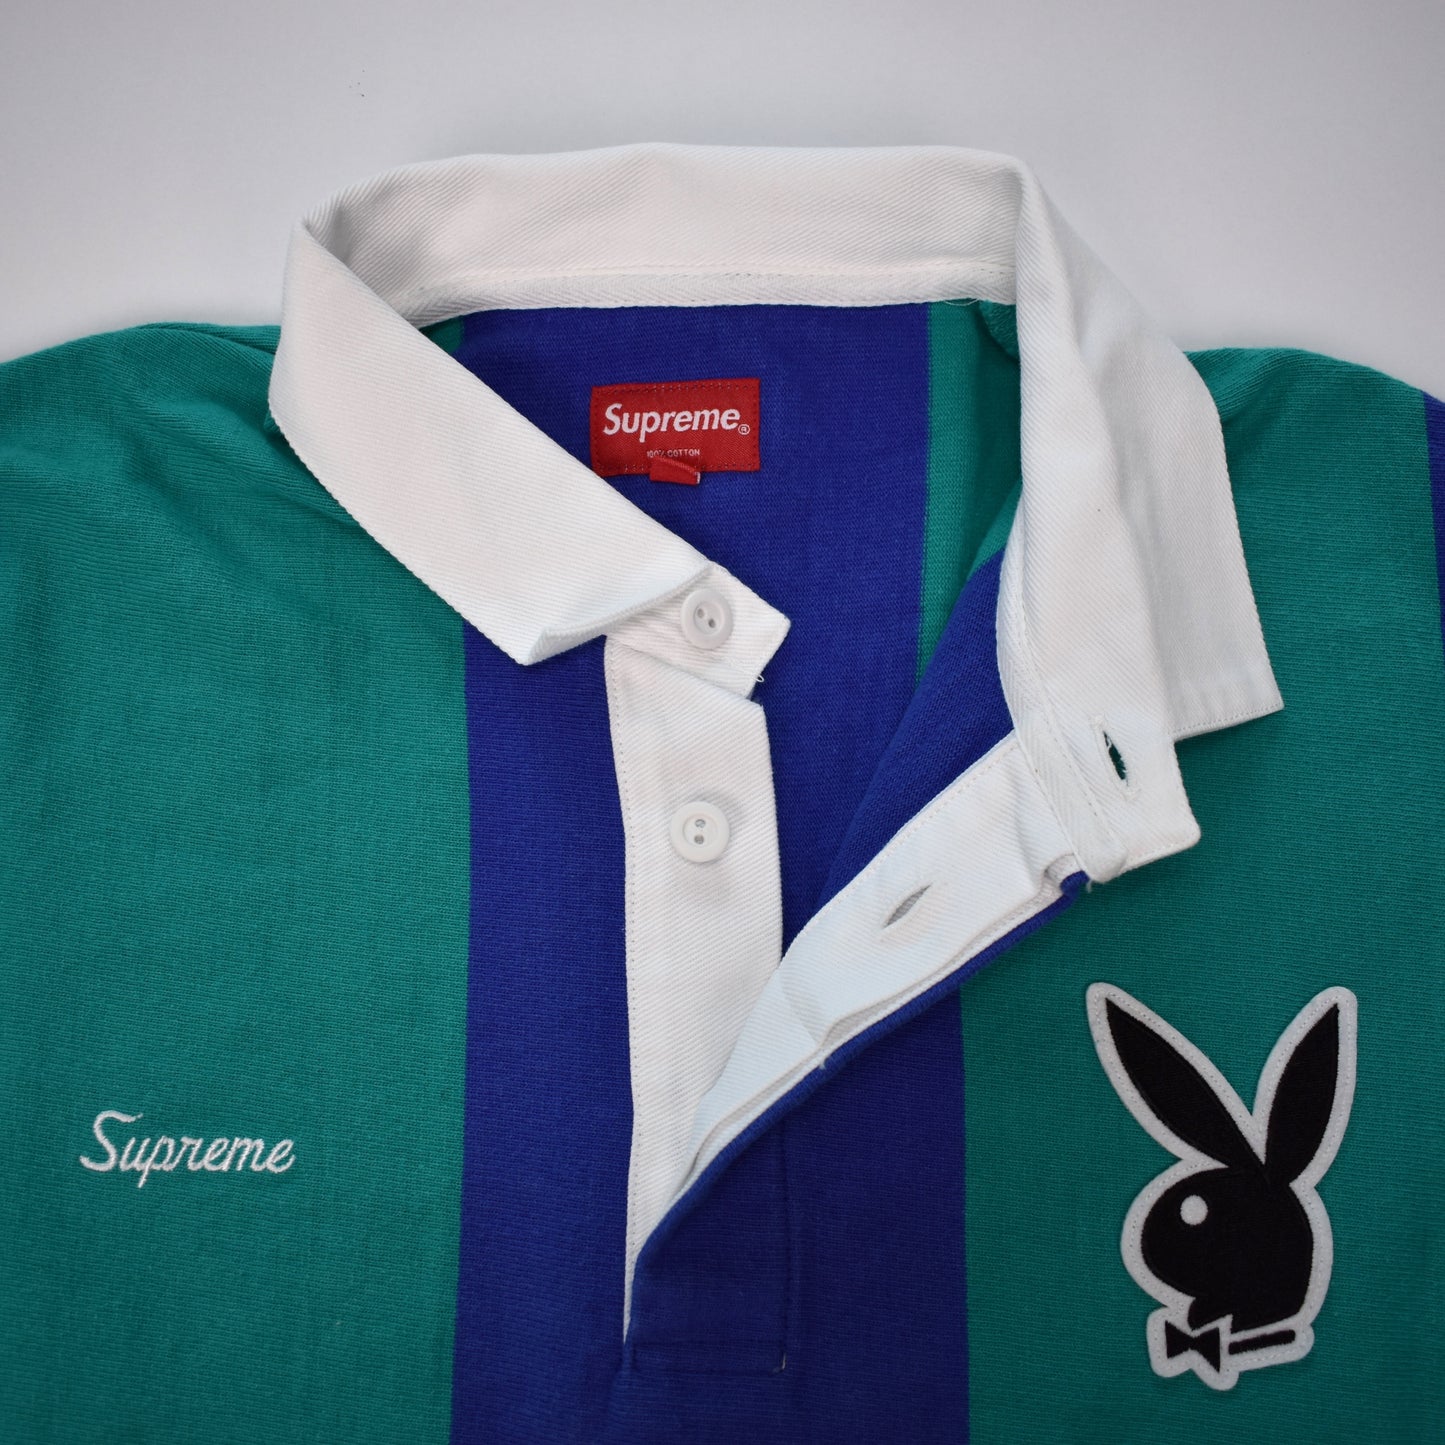 Supreme x Playboy - Teal Rugby Shirt